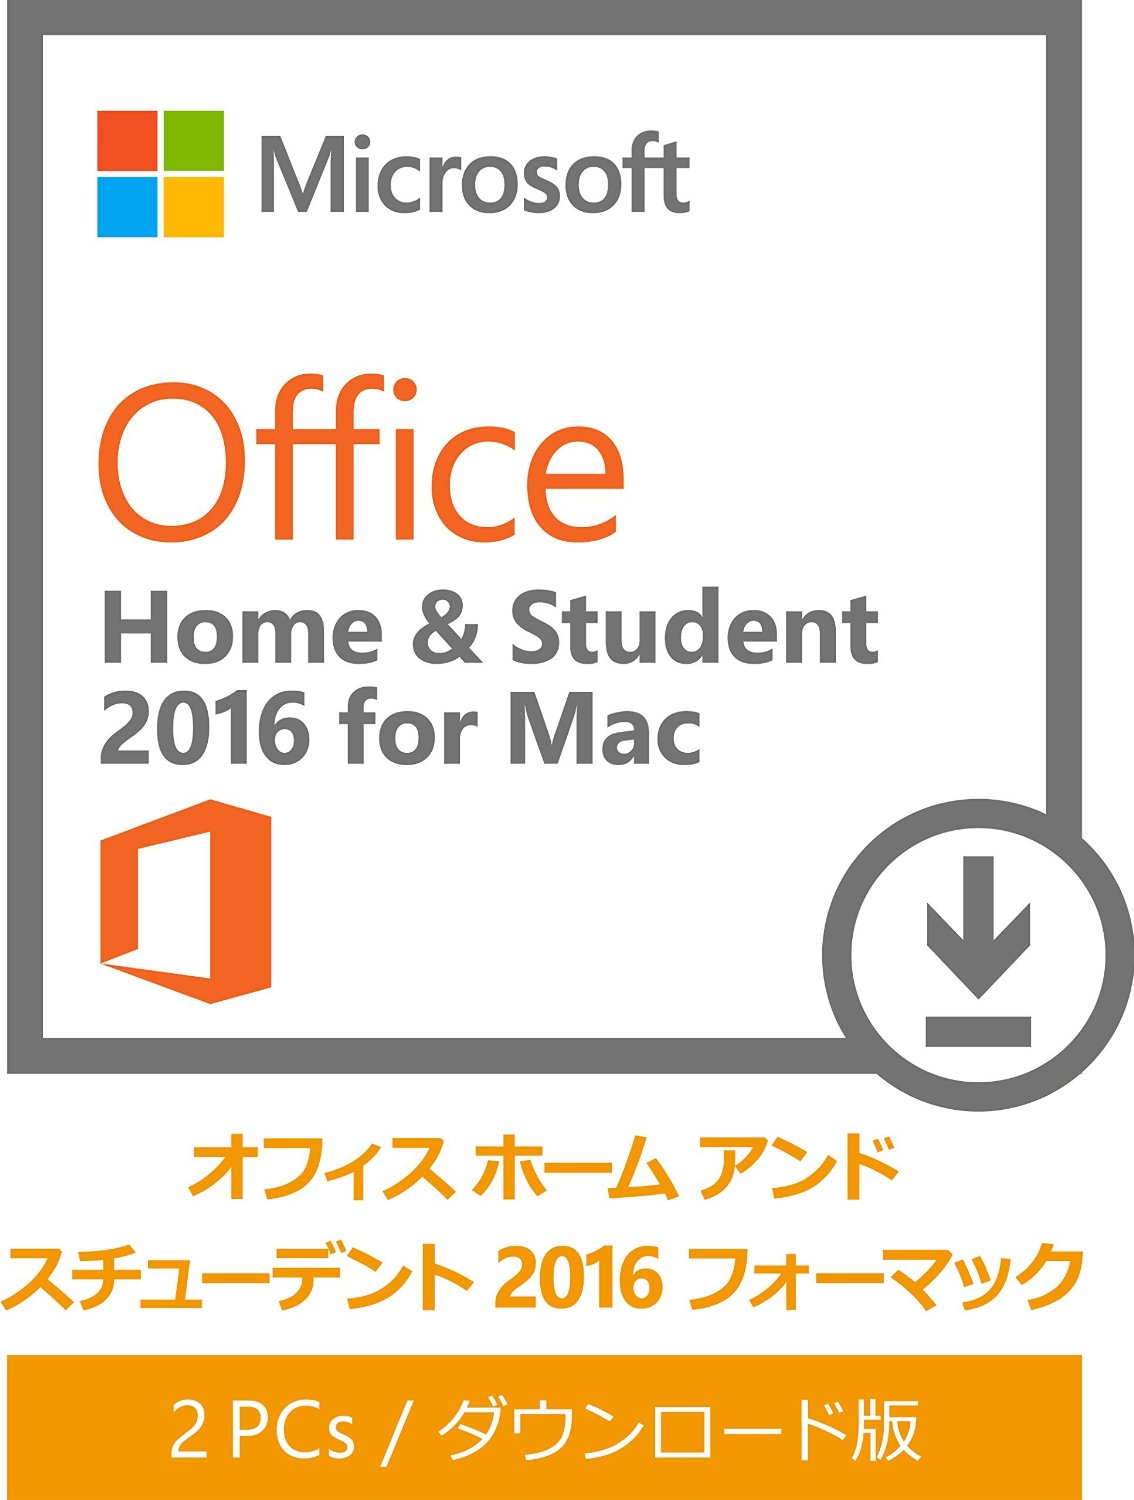 23 361 17 492 Mac版office 16 Microsoft Office Mac Home Student 16 Familypack が25 オフで期間限定セール中 3 31